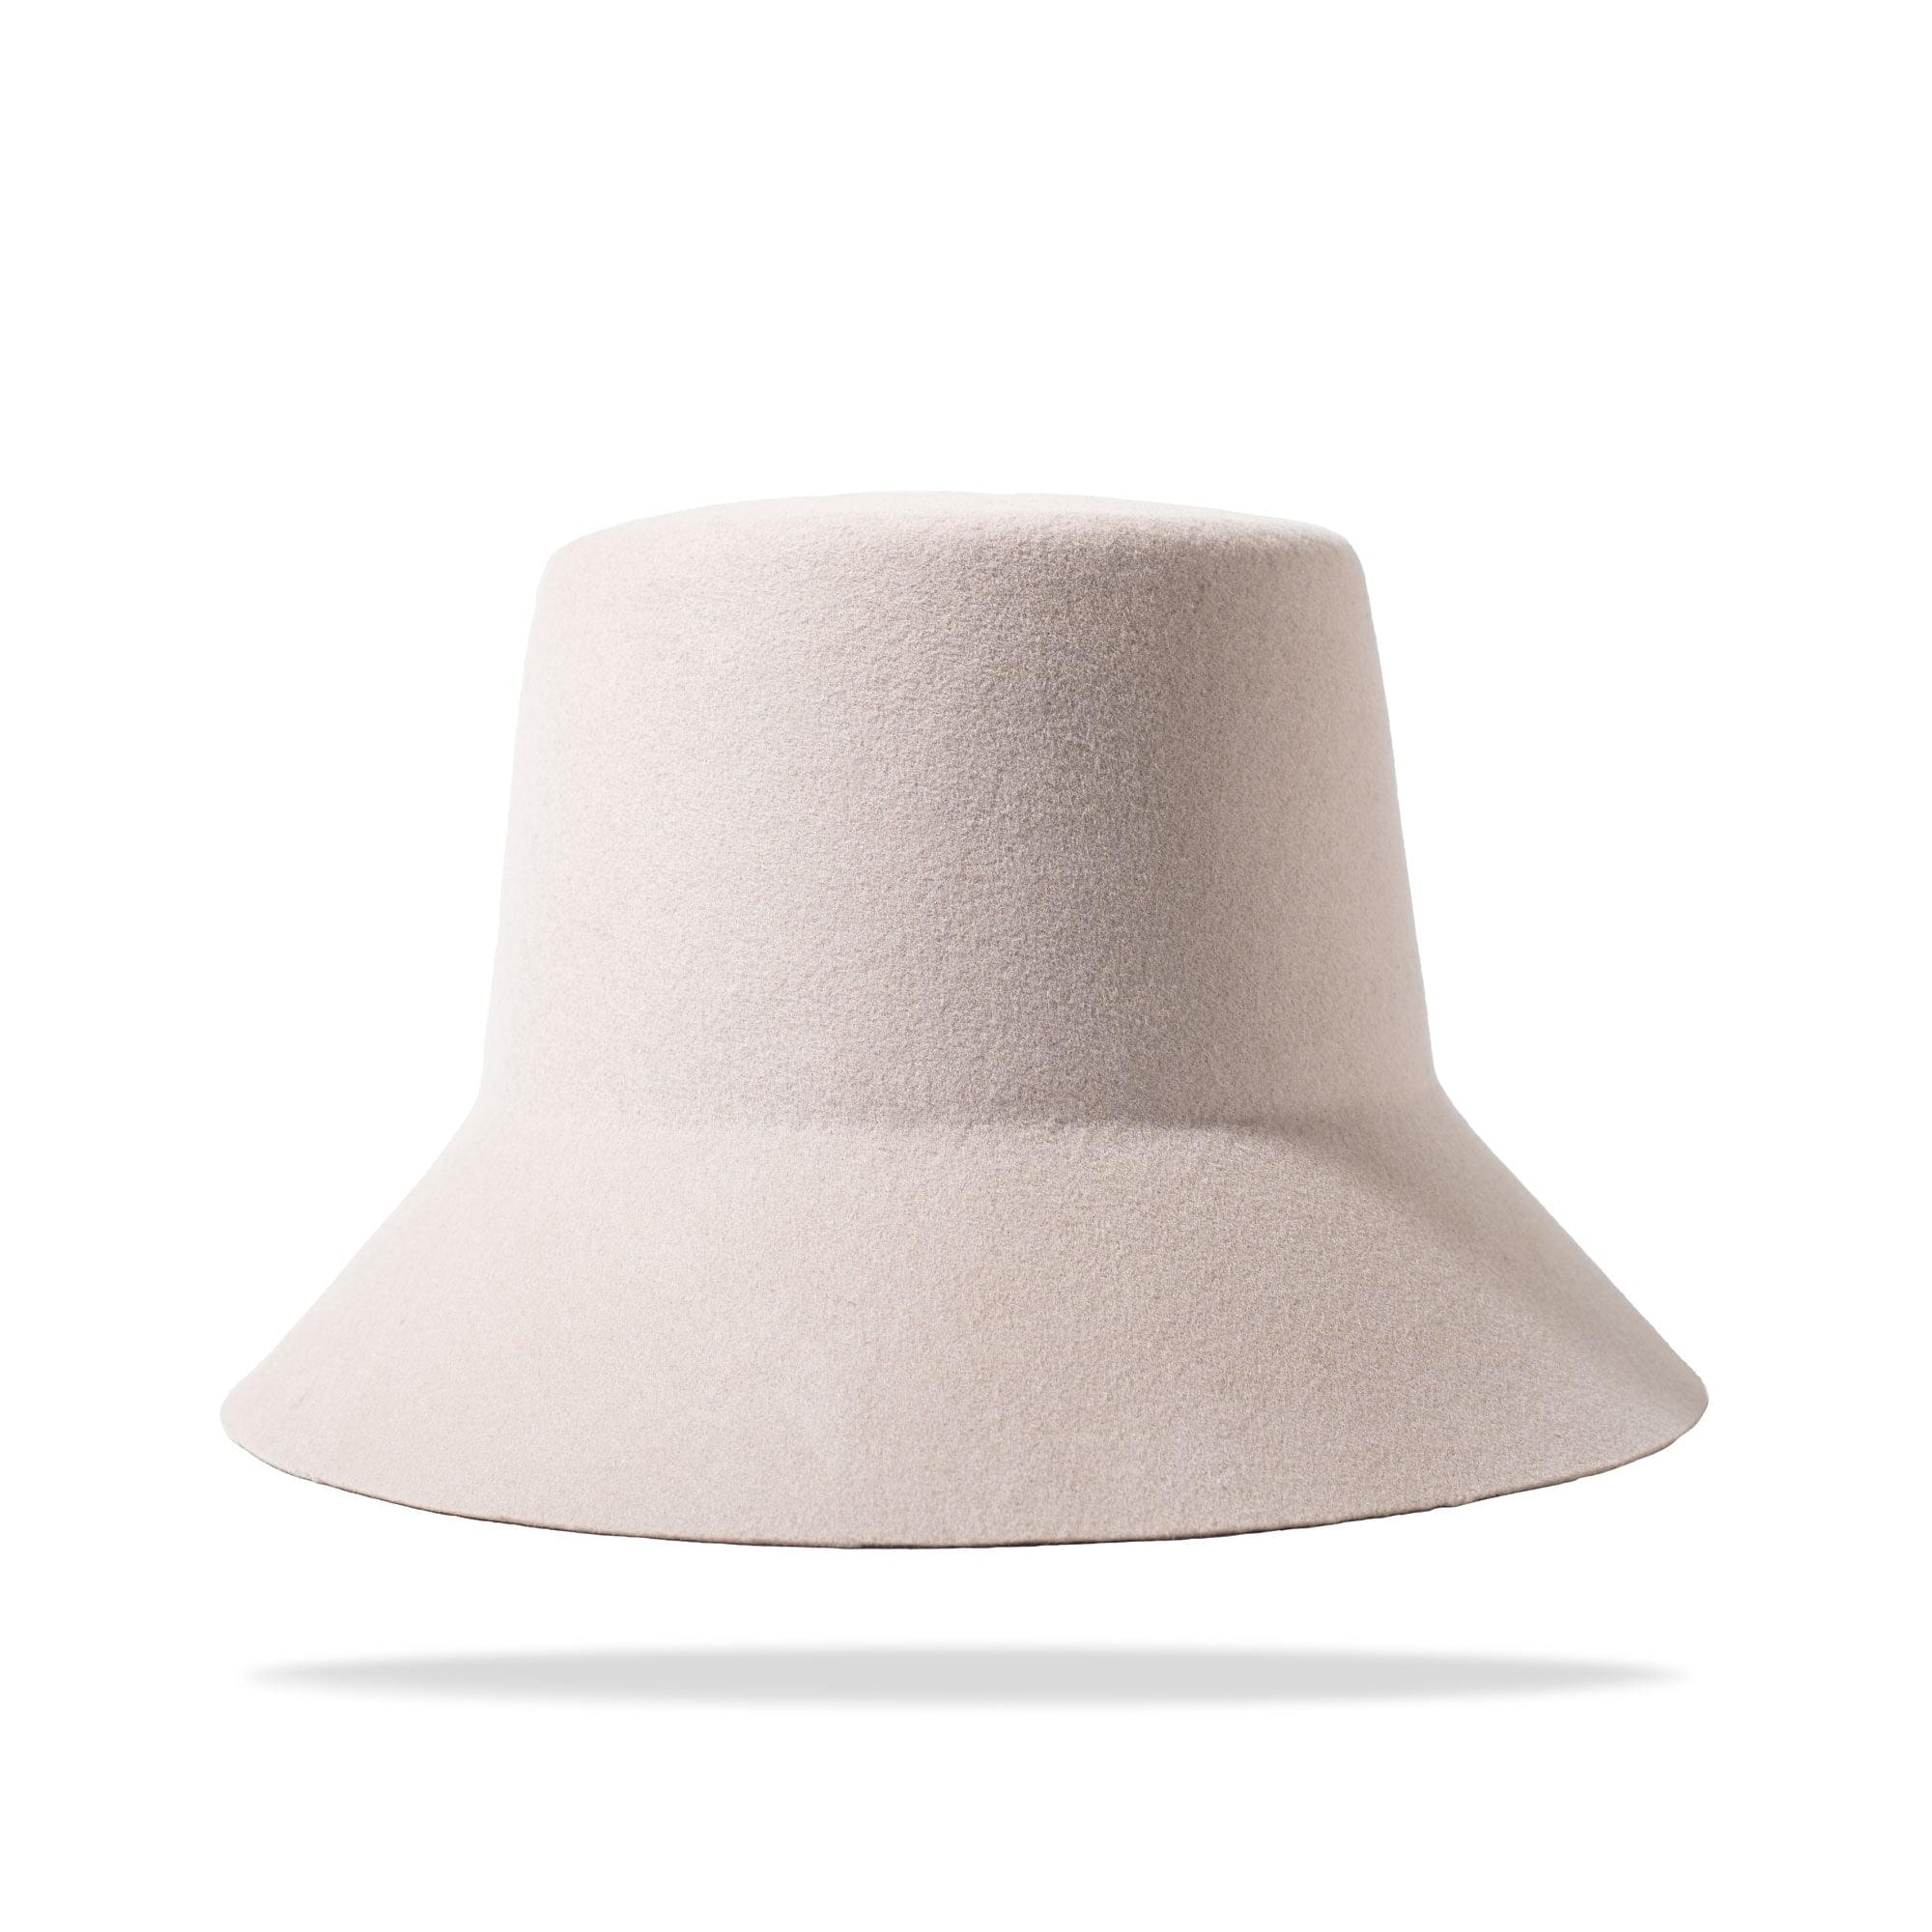 Lana Bucket Hat - Buskin